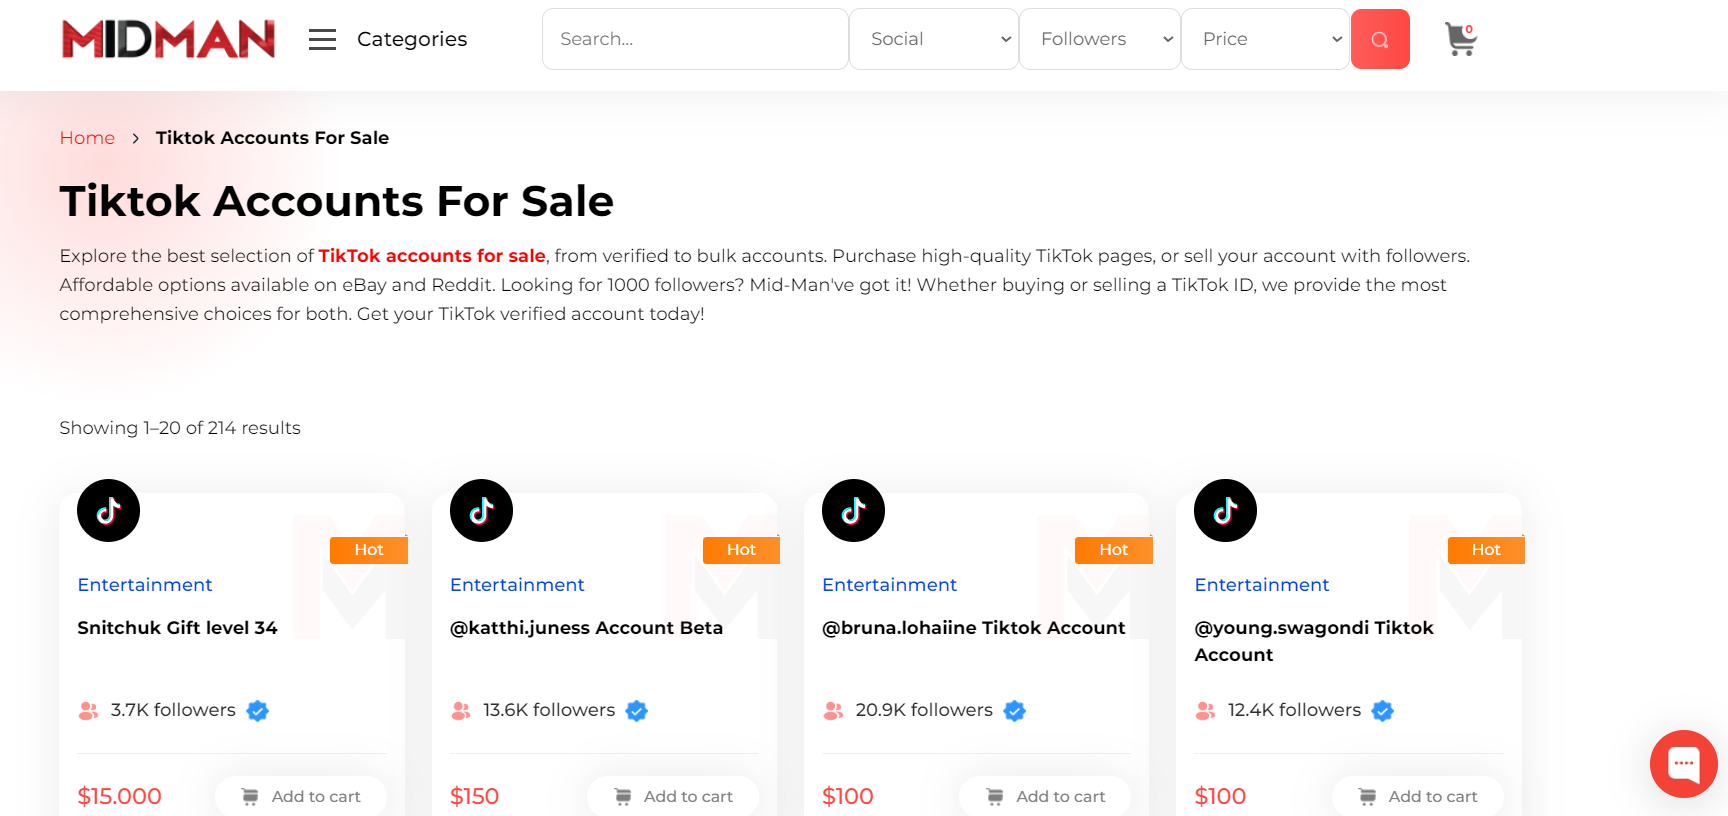 Blue verified Tiktok Account For sale - Buy & Sell TikTok Accounts